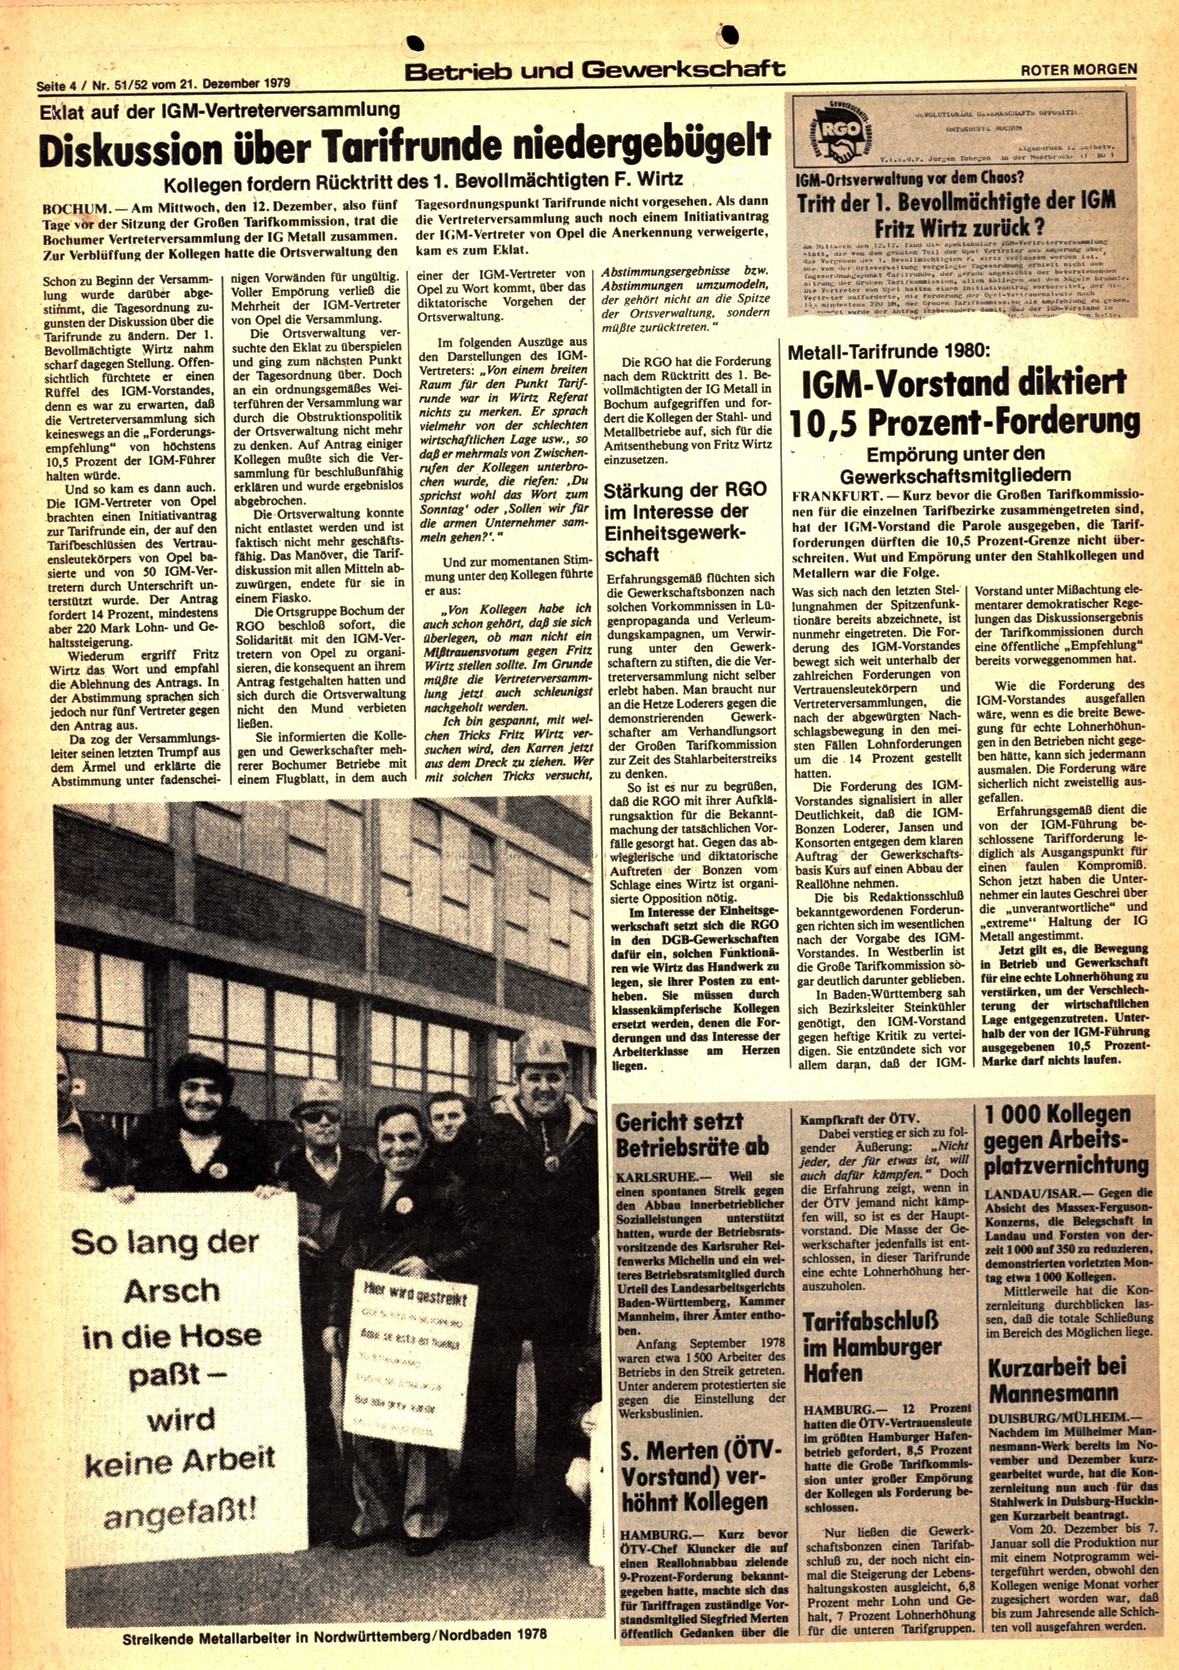 Roter Morgen, 13. Jg., 21. Dezember 1979, Nr. 51/52, Seite 4